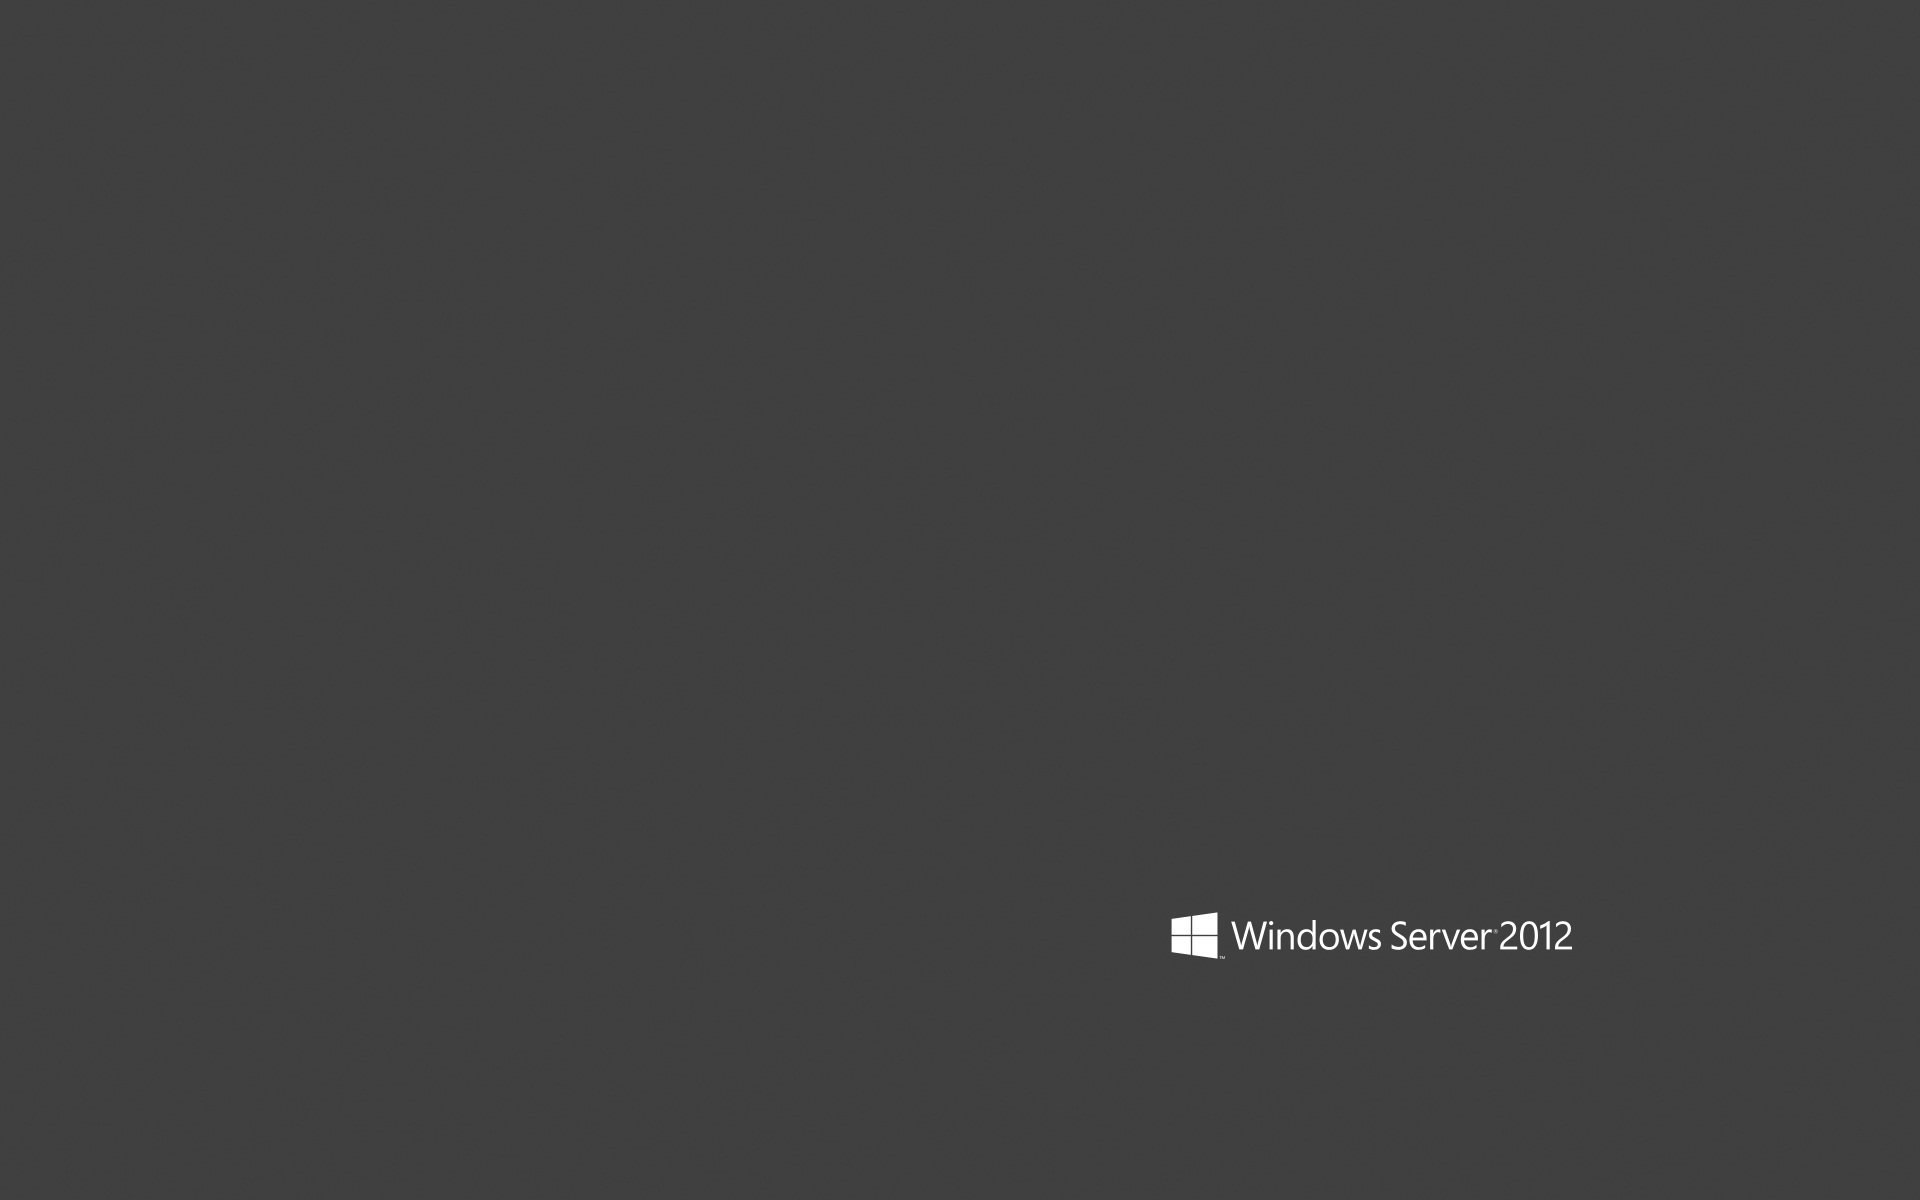 Windows Server Default Wallpaper By Alexstrand7